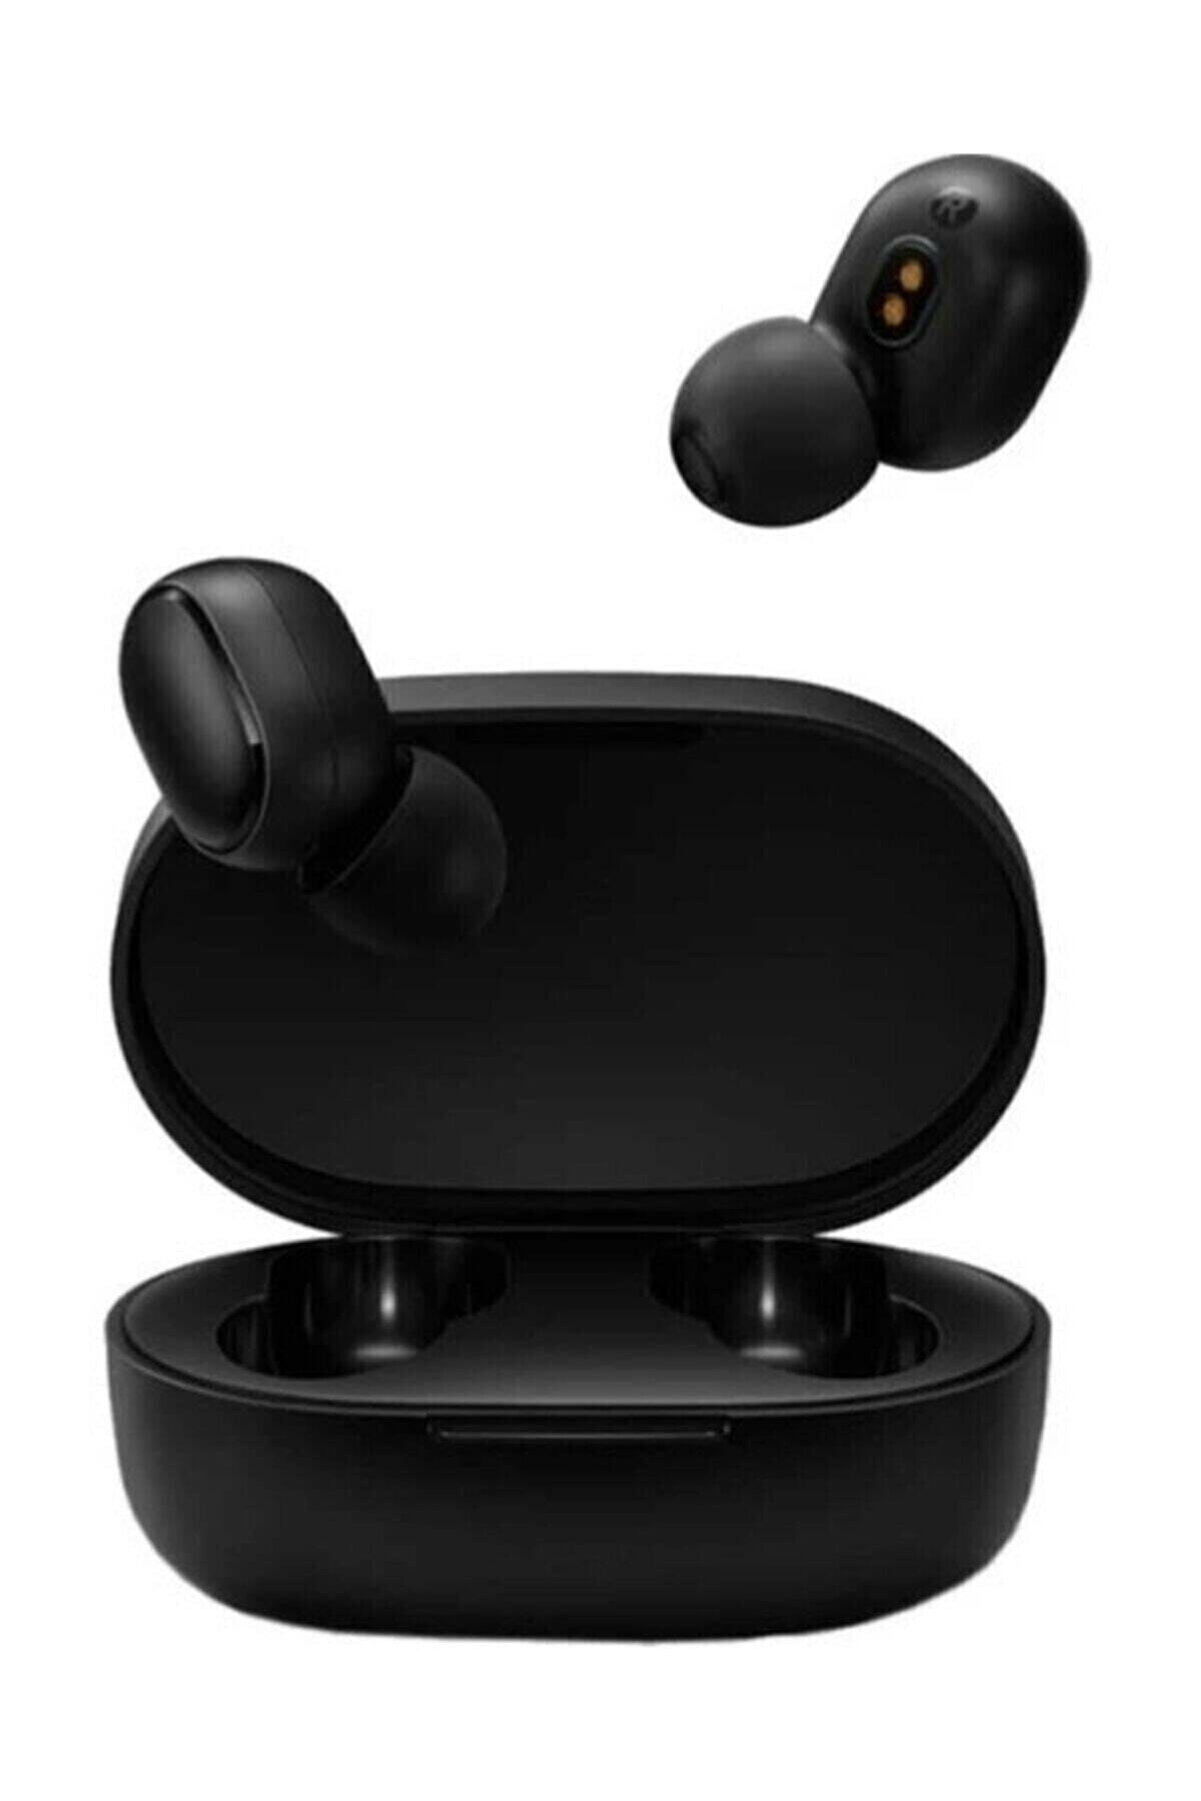 MI True Wireless Earbuds Basic Kablosuz Kulak Içi Bluetooth Kulaklık